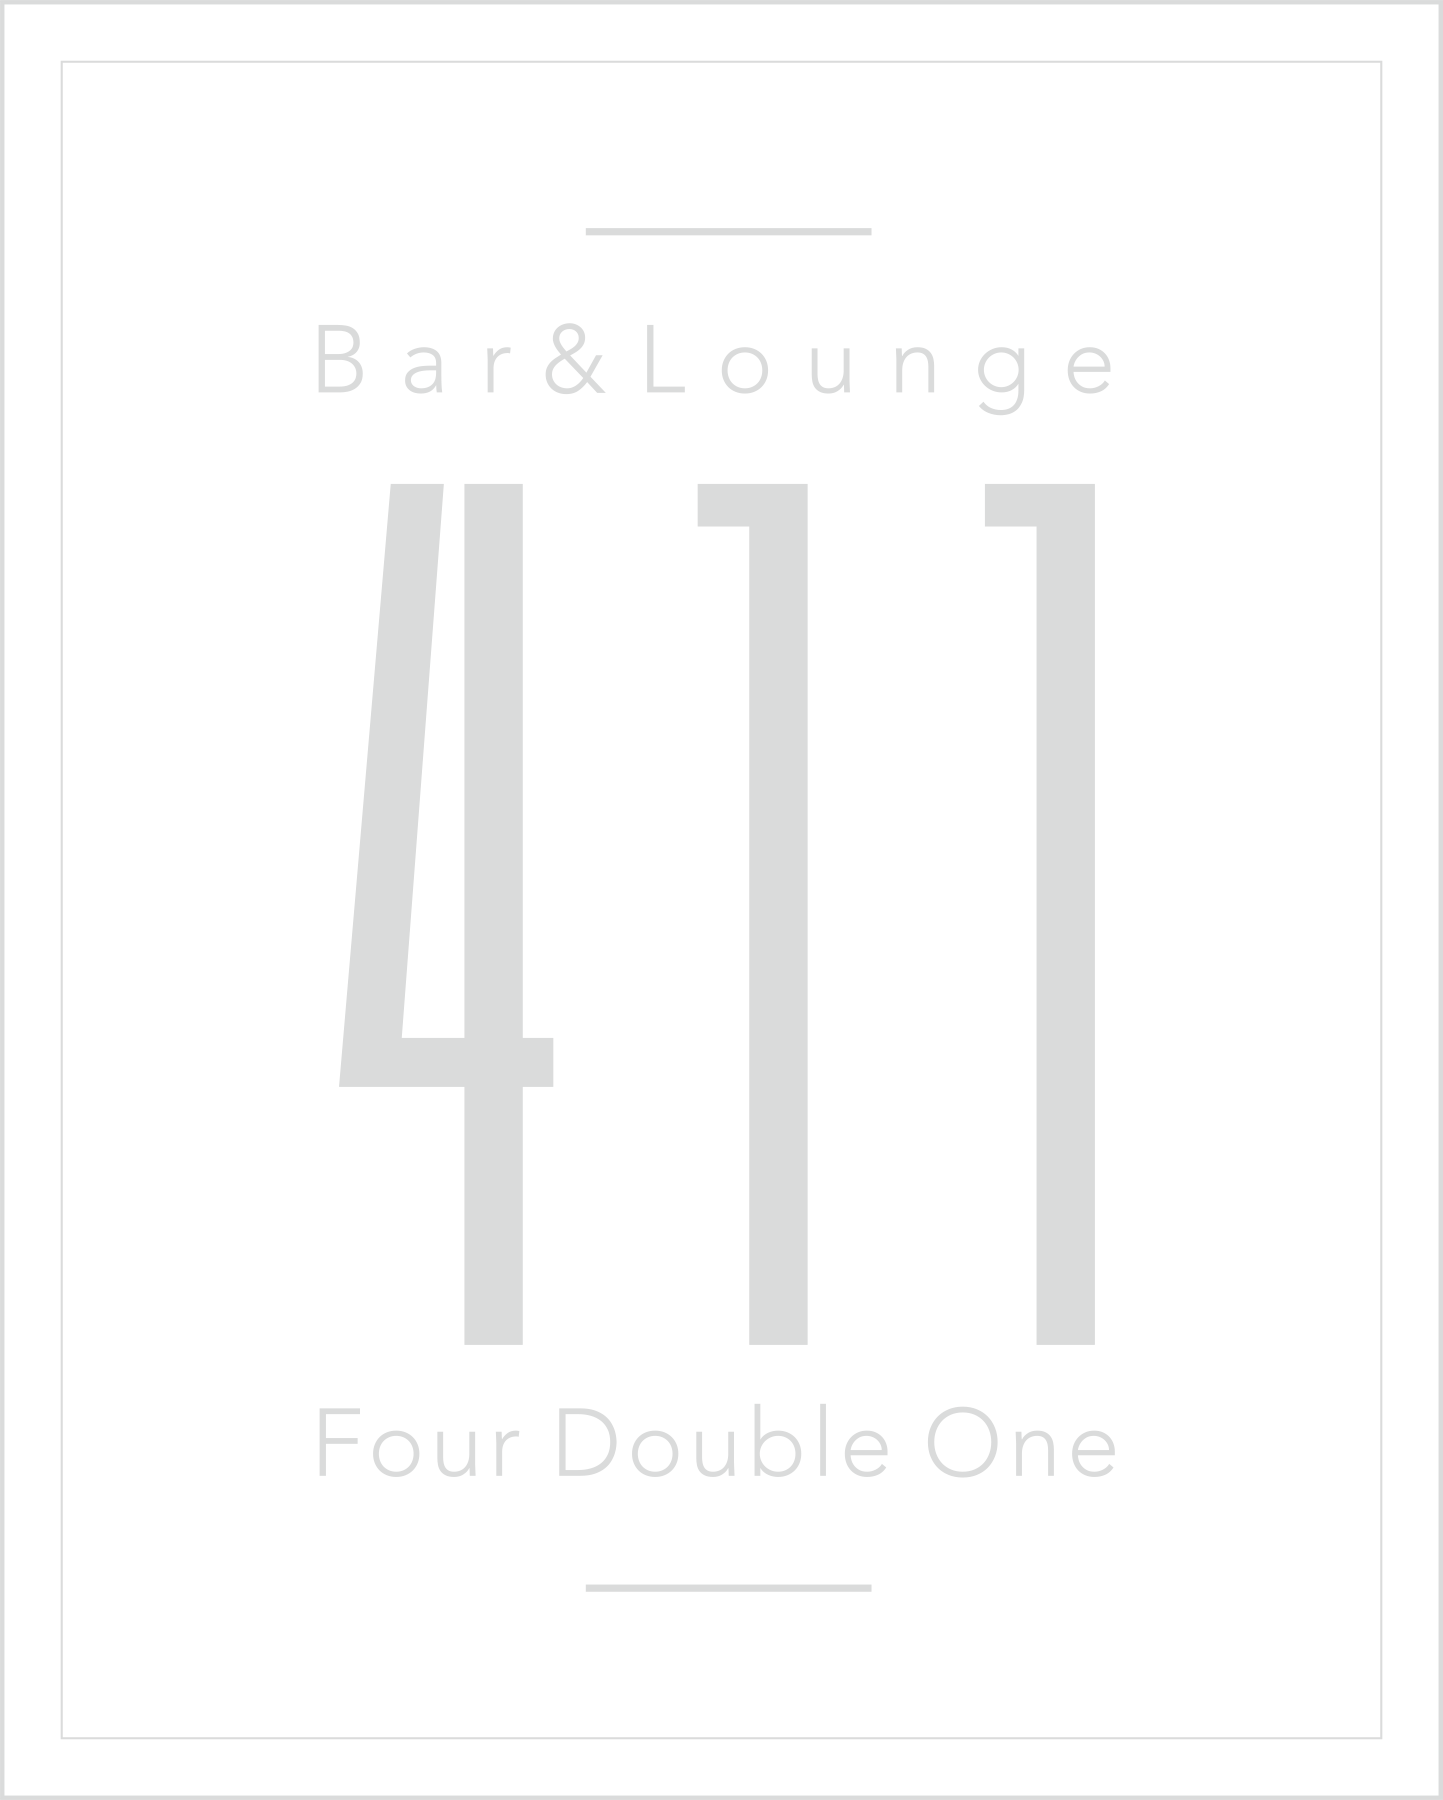 Shisha Bar & Lounge 411【Four Double One】ロゴ